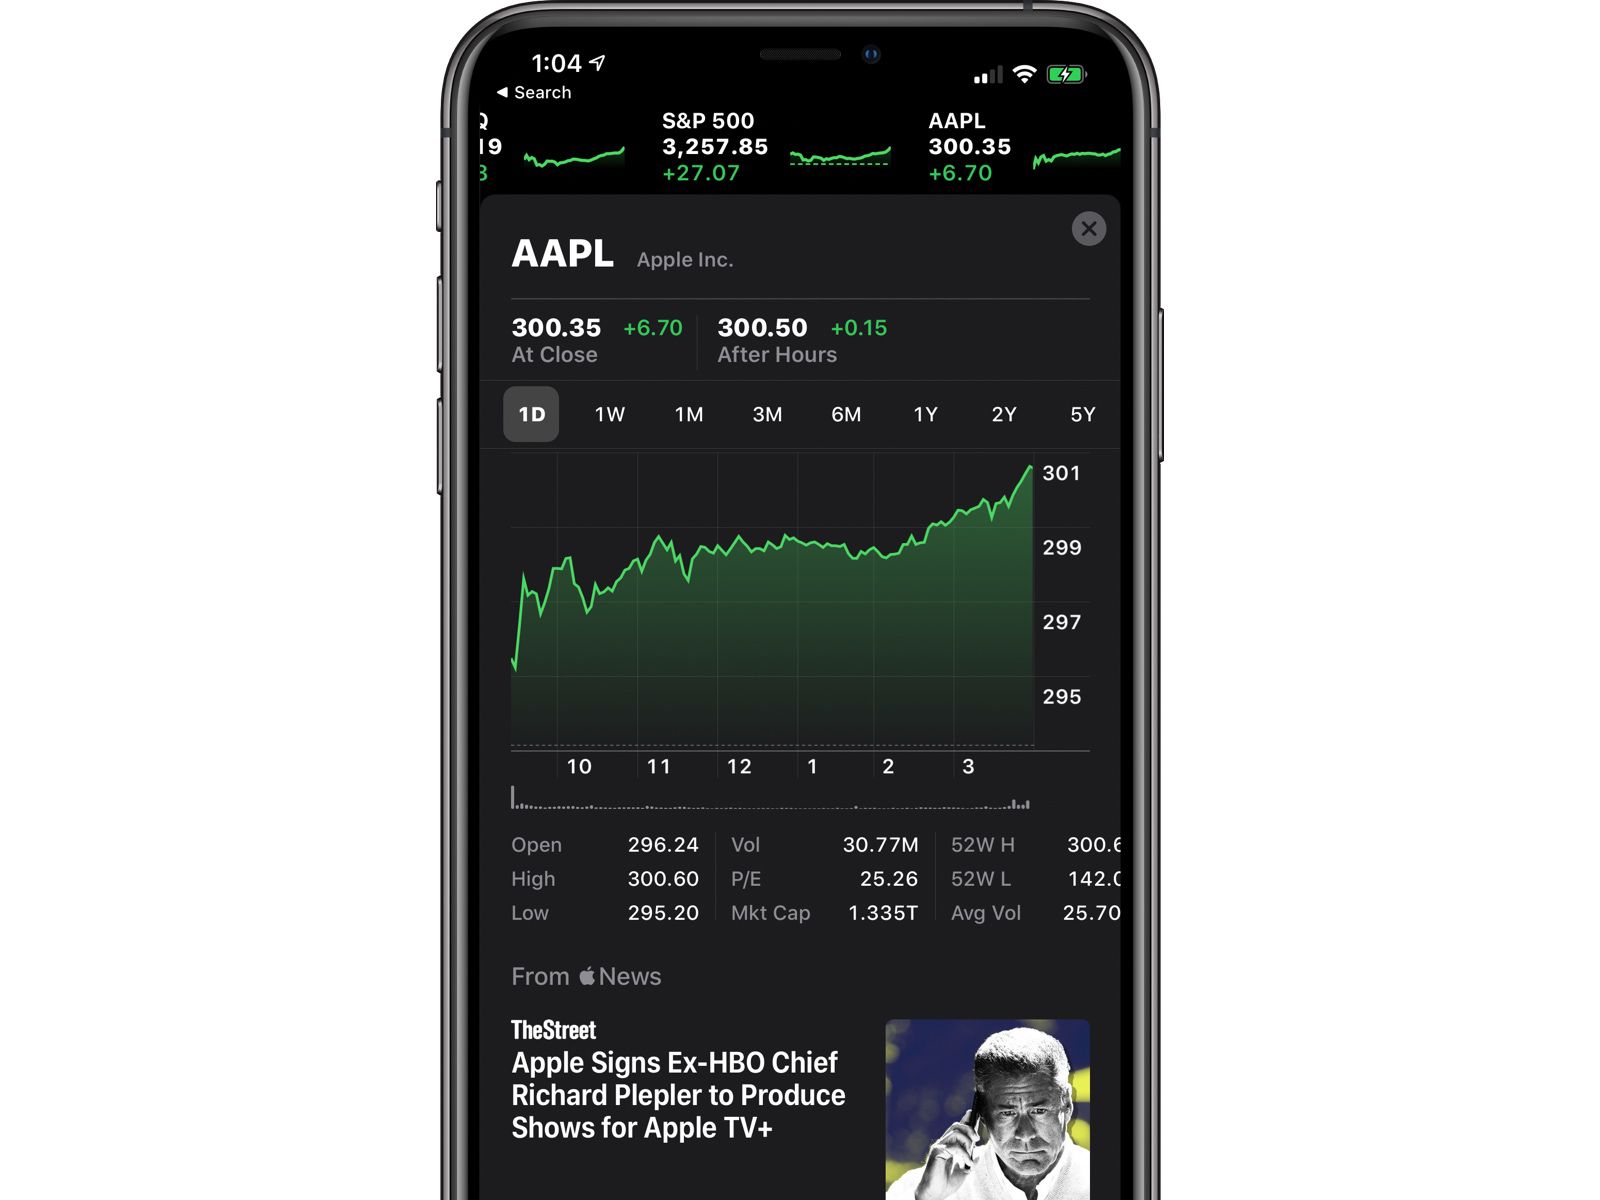 Can Apple stock reach $300?